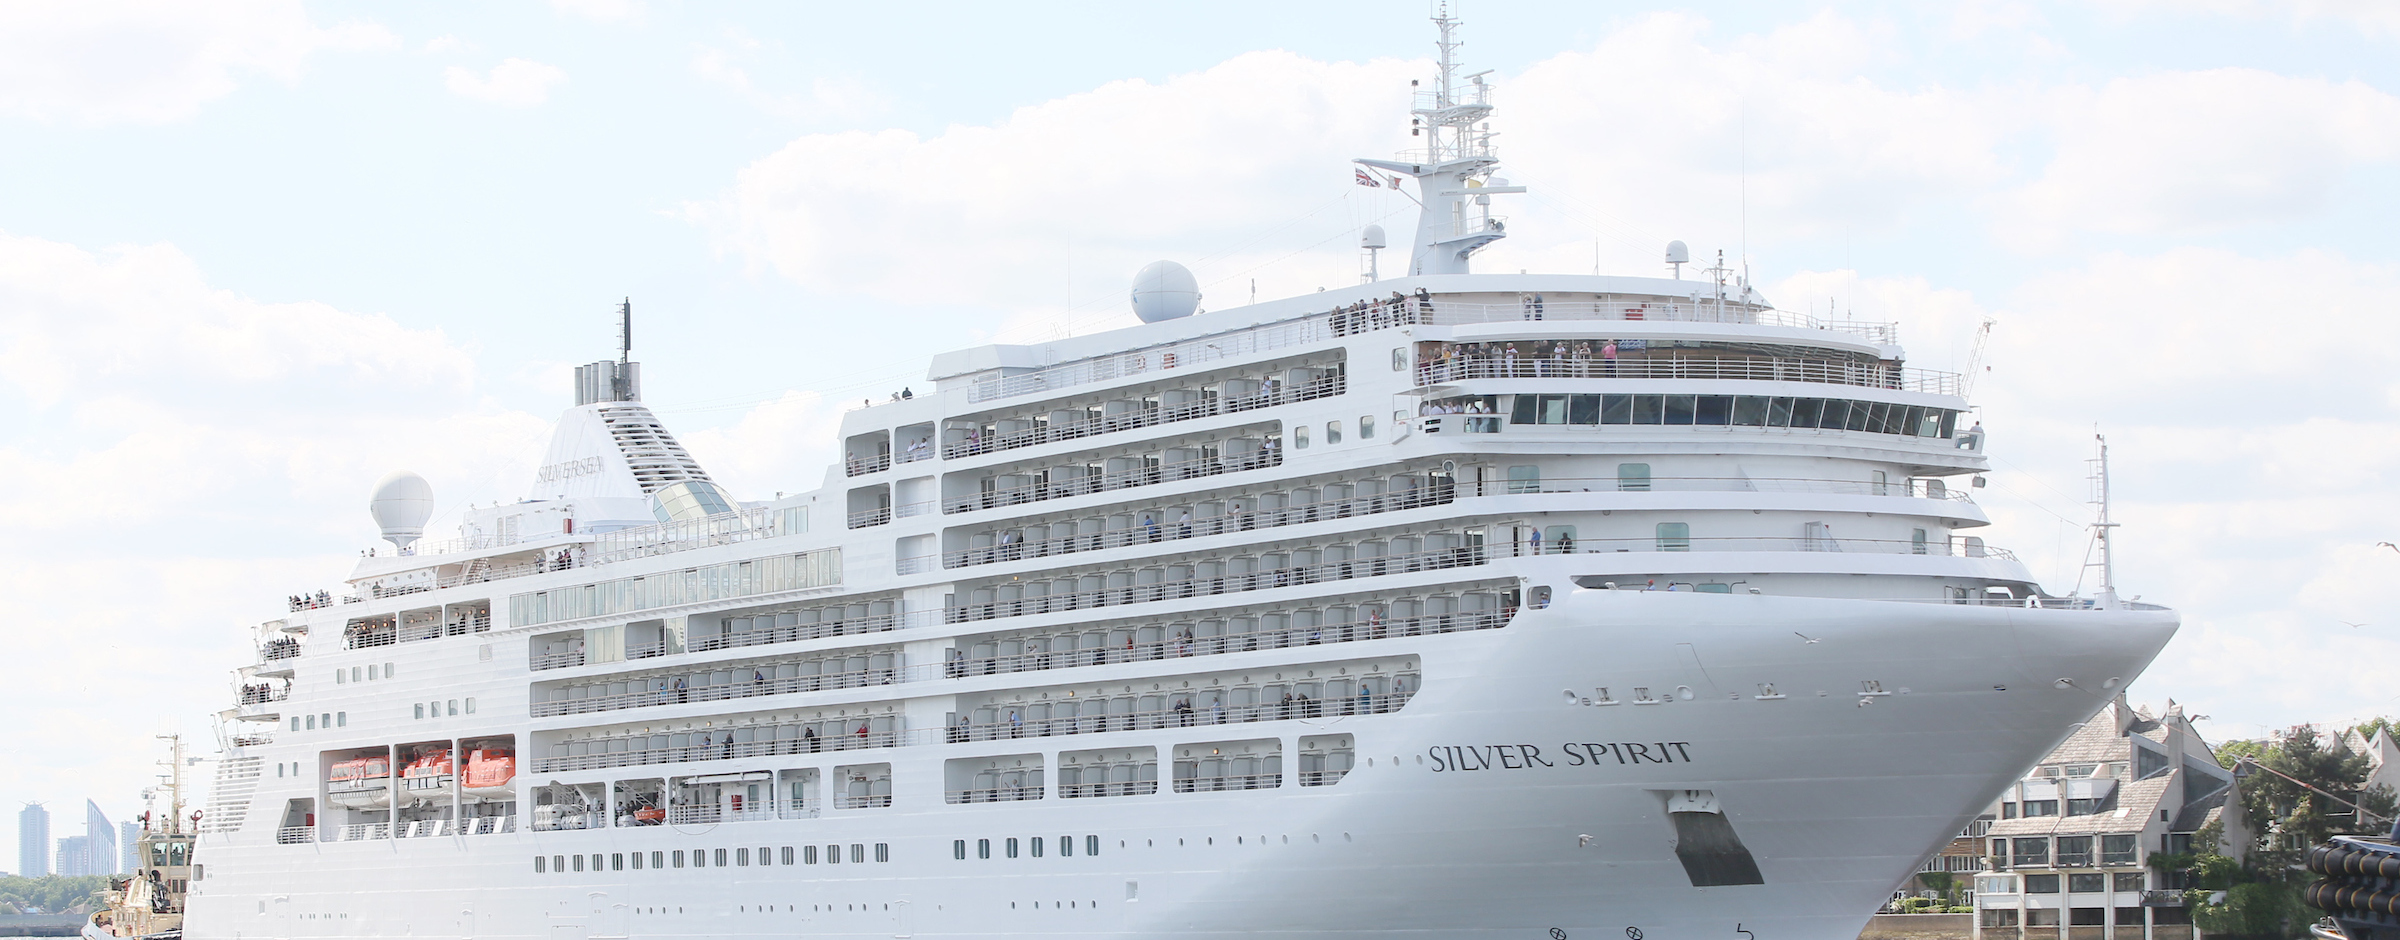 South America & Caribbean Cruise on Silver Spirit